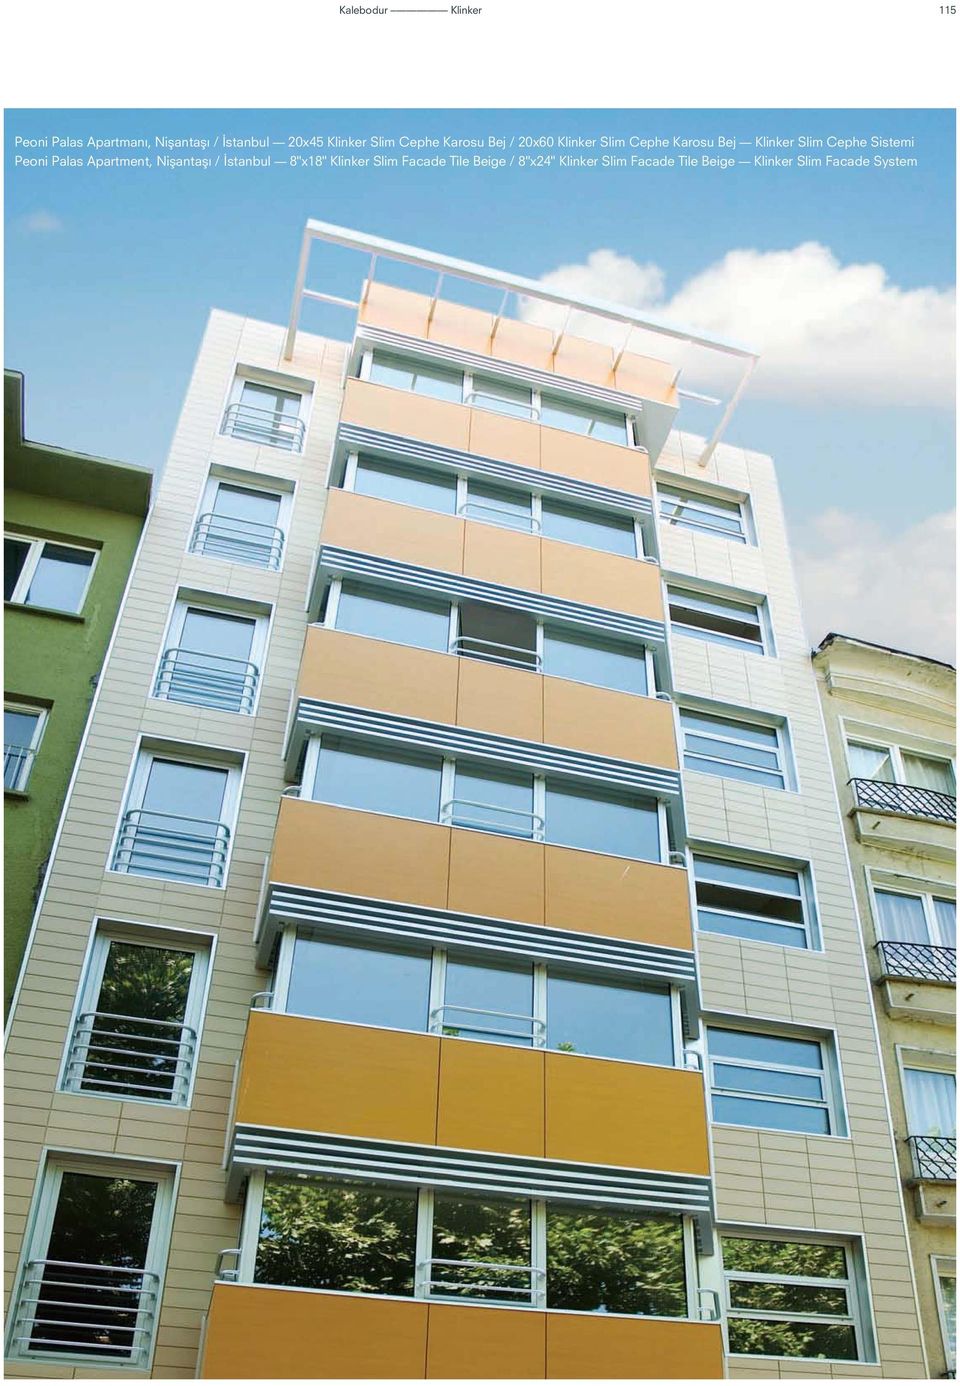 Slim Cephe Sistemi Peoni Palas Apartment, Nişantaşı / İstanbul 8"x18" Klinker